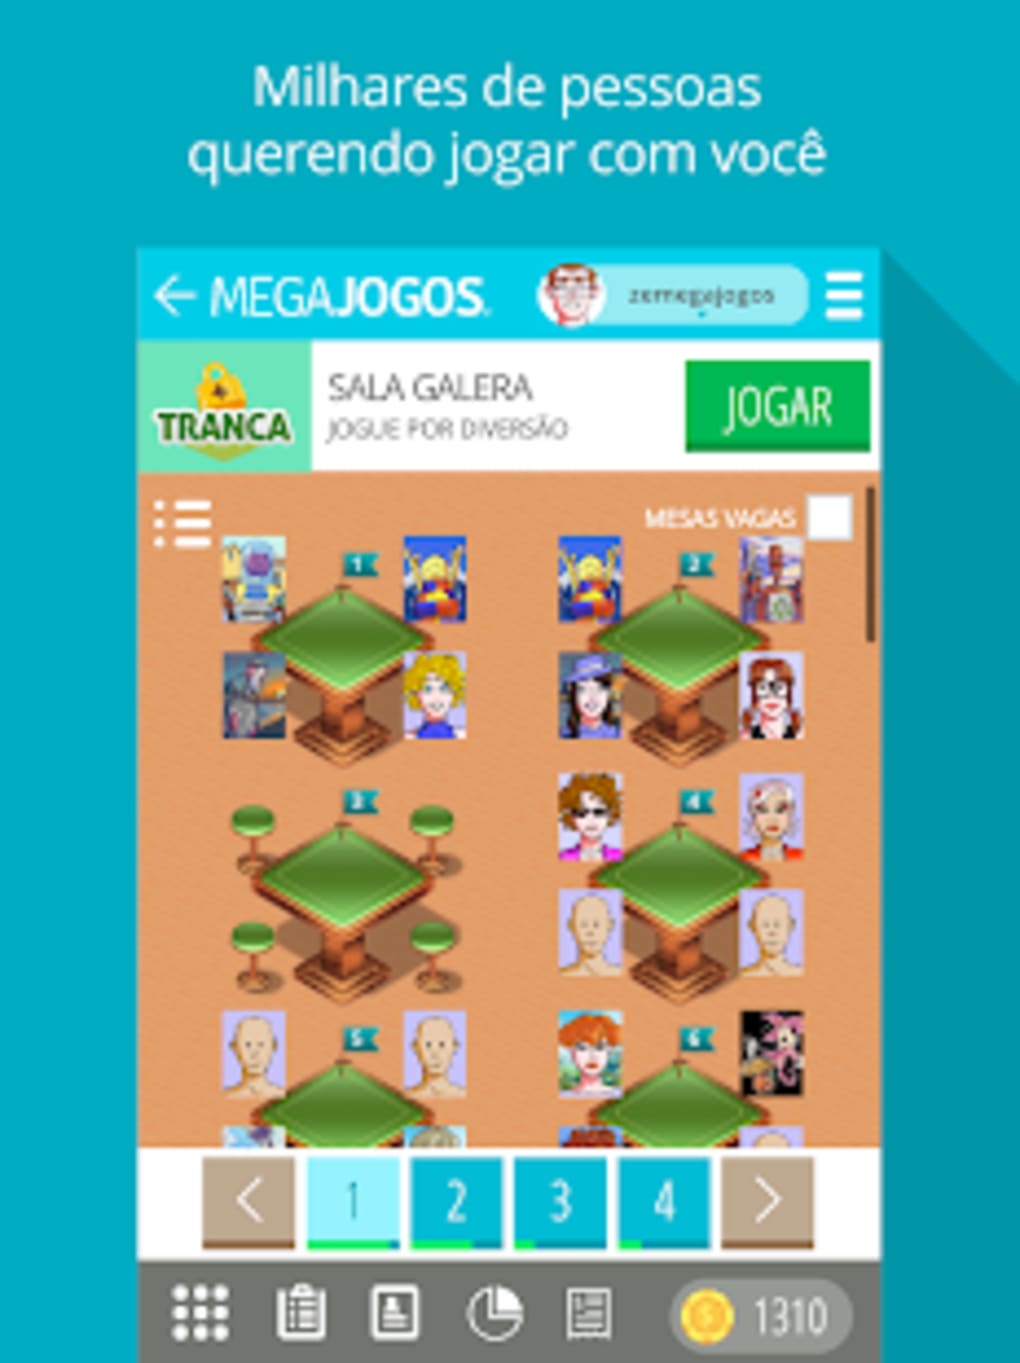 Tranca Online - Jogo de Cartas - Apps on Google Play